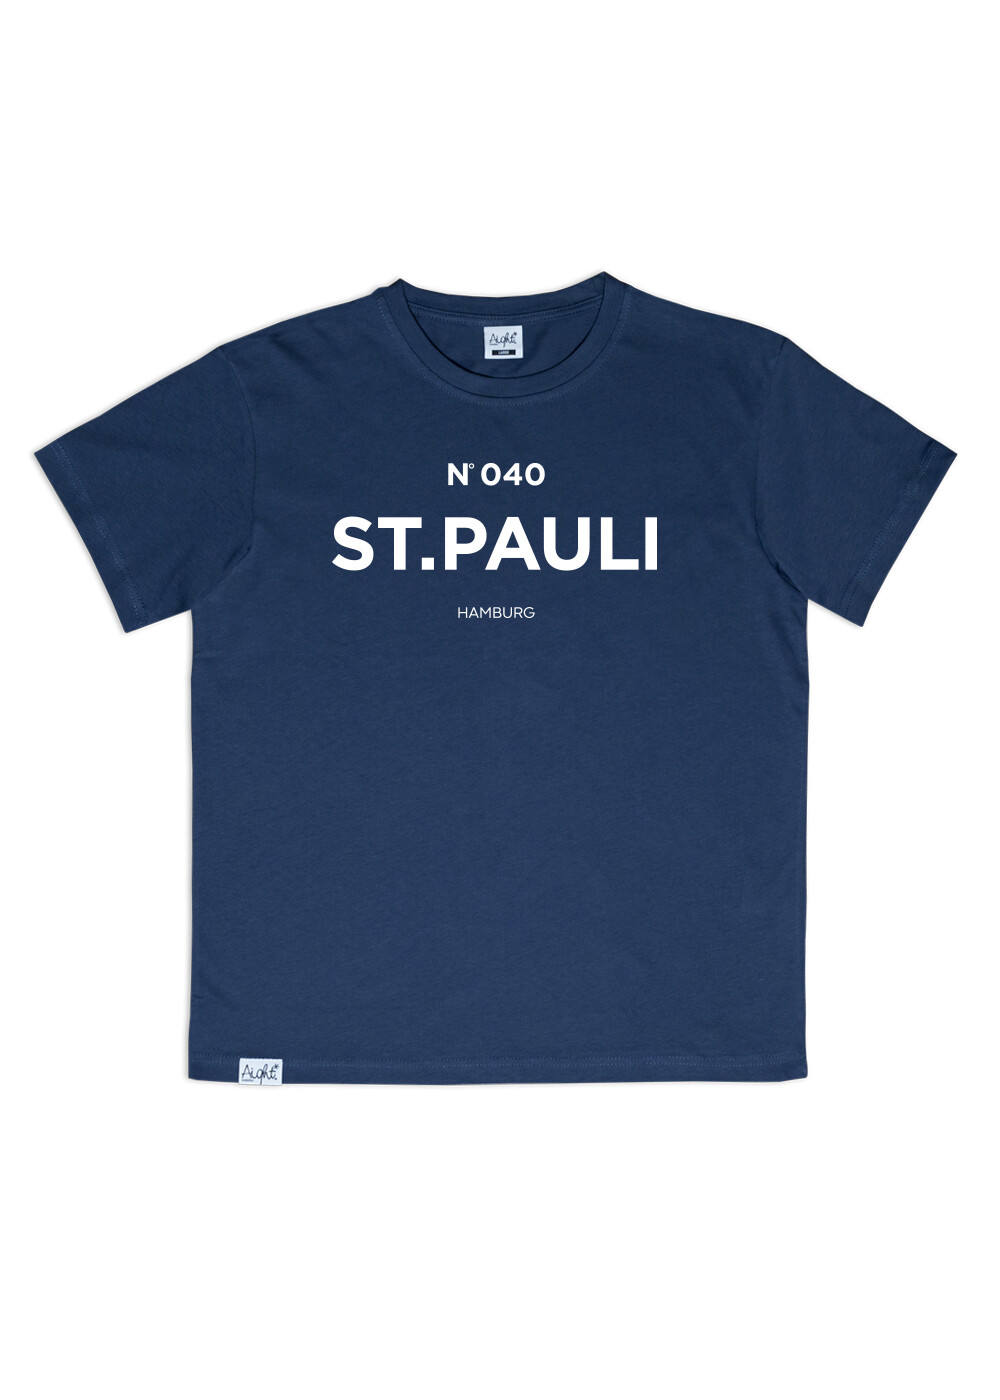 Aight* T-Shirt - "ST.PAULI" vintage indigo